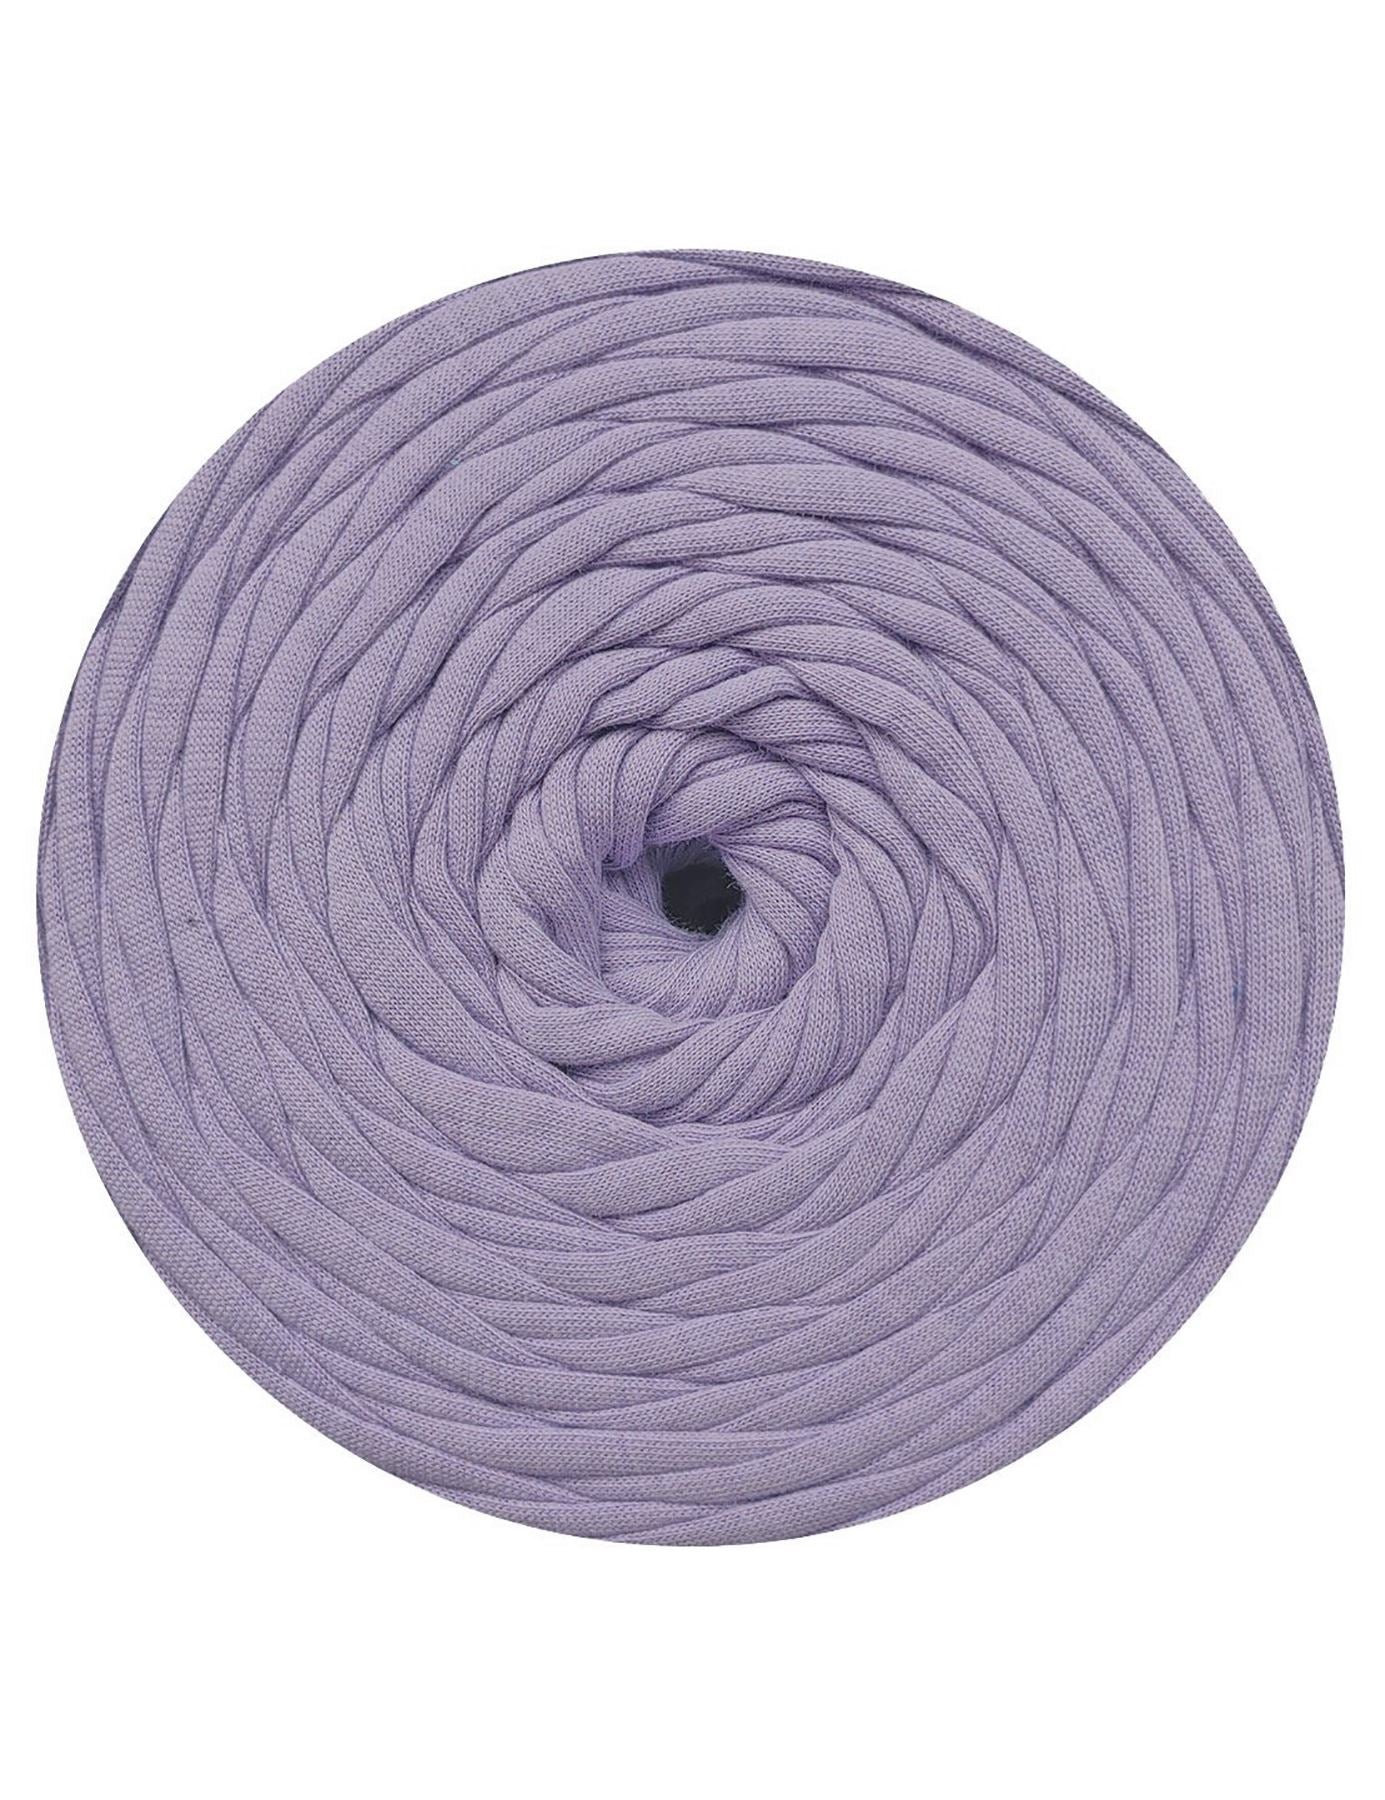 Slate purple t-shirt yarn by Rescue Yarn (100-120m)